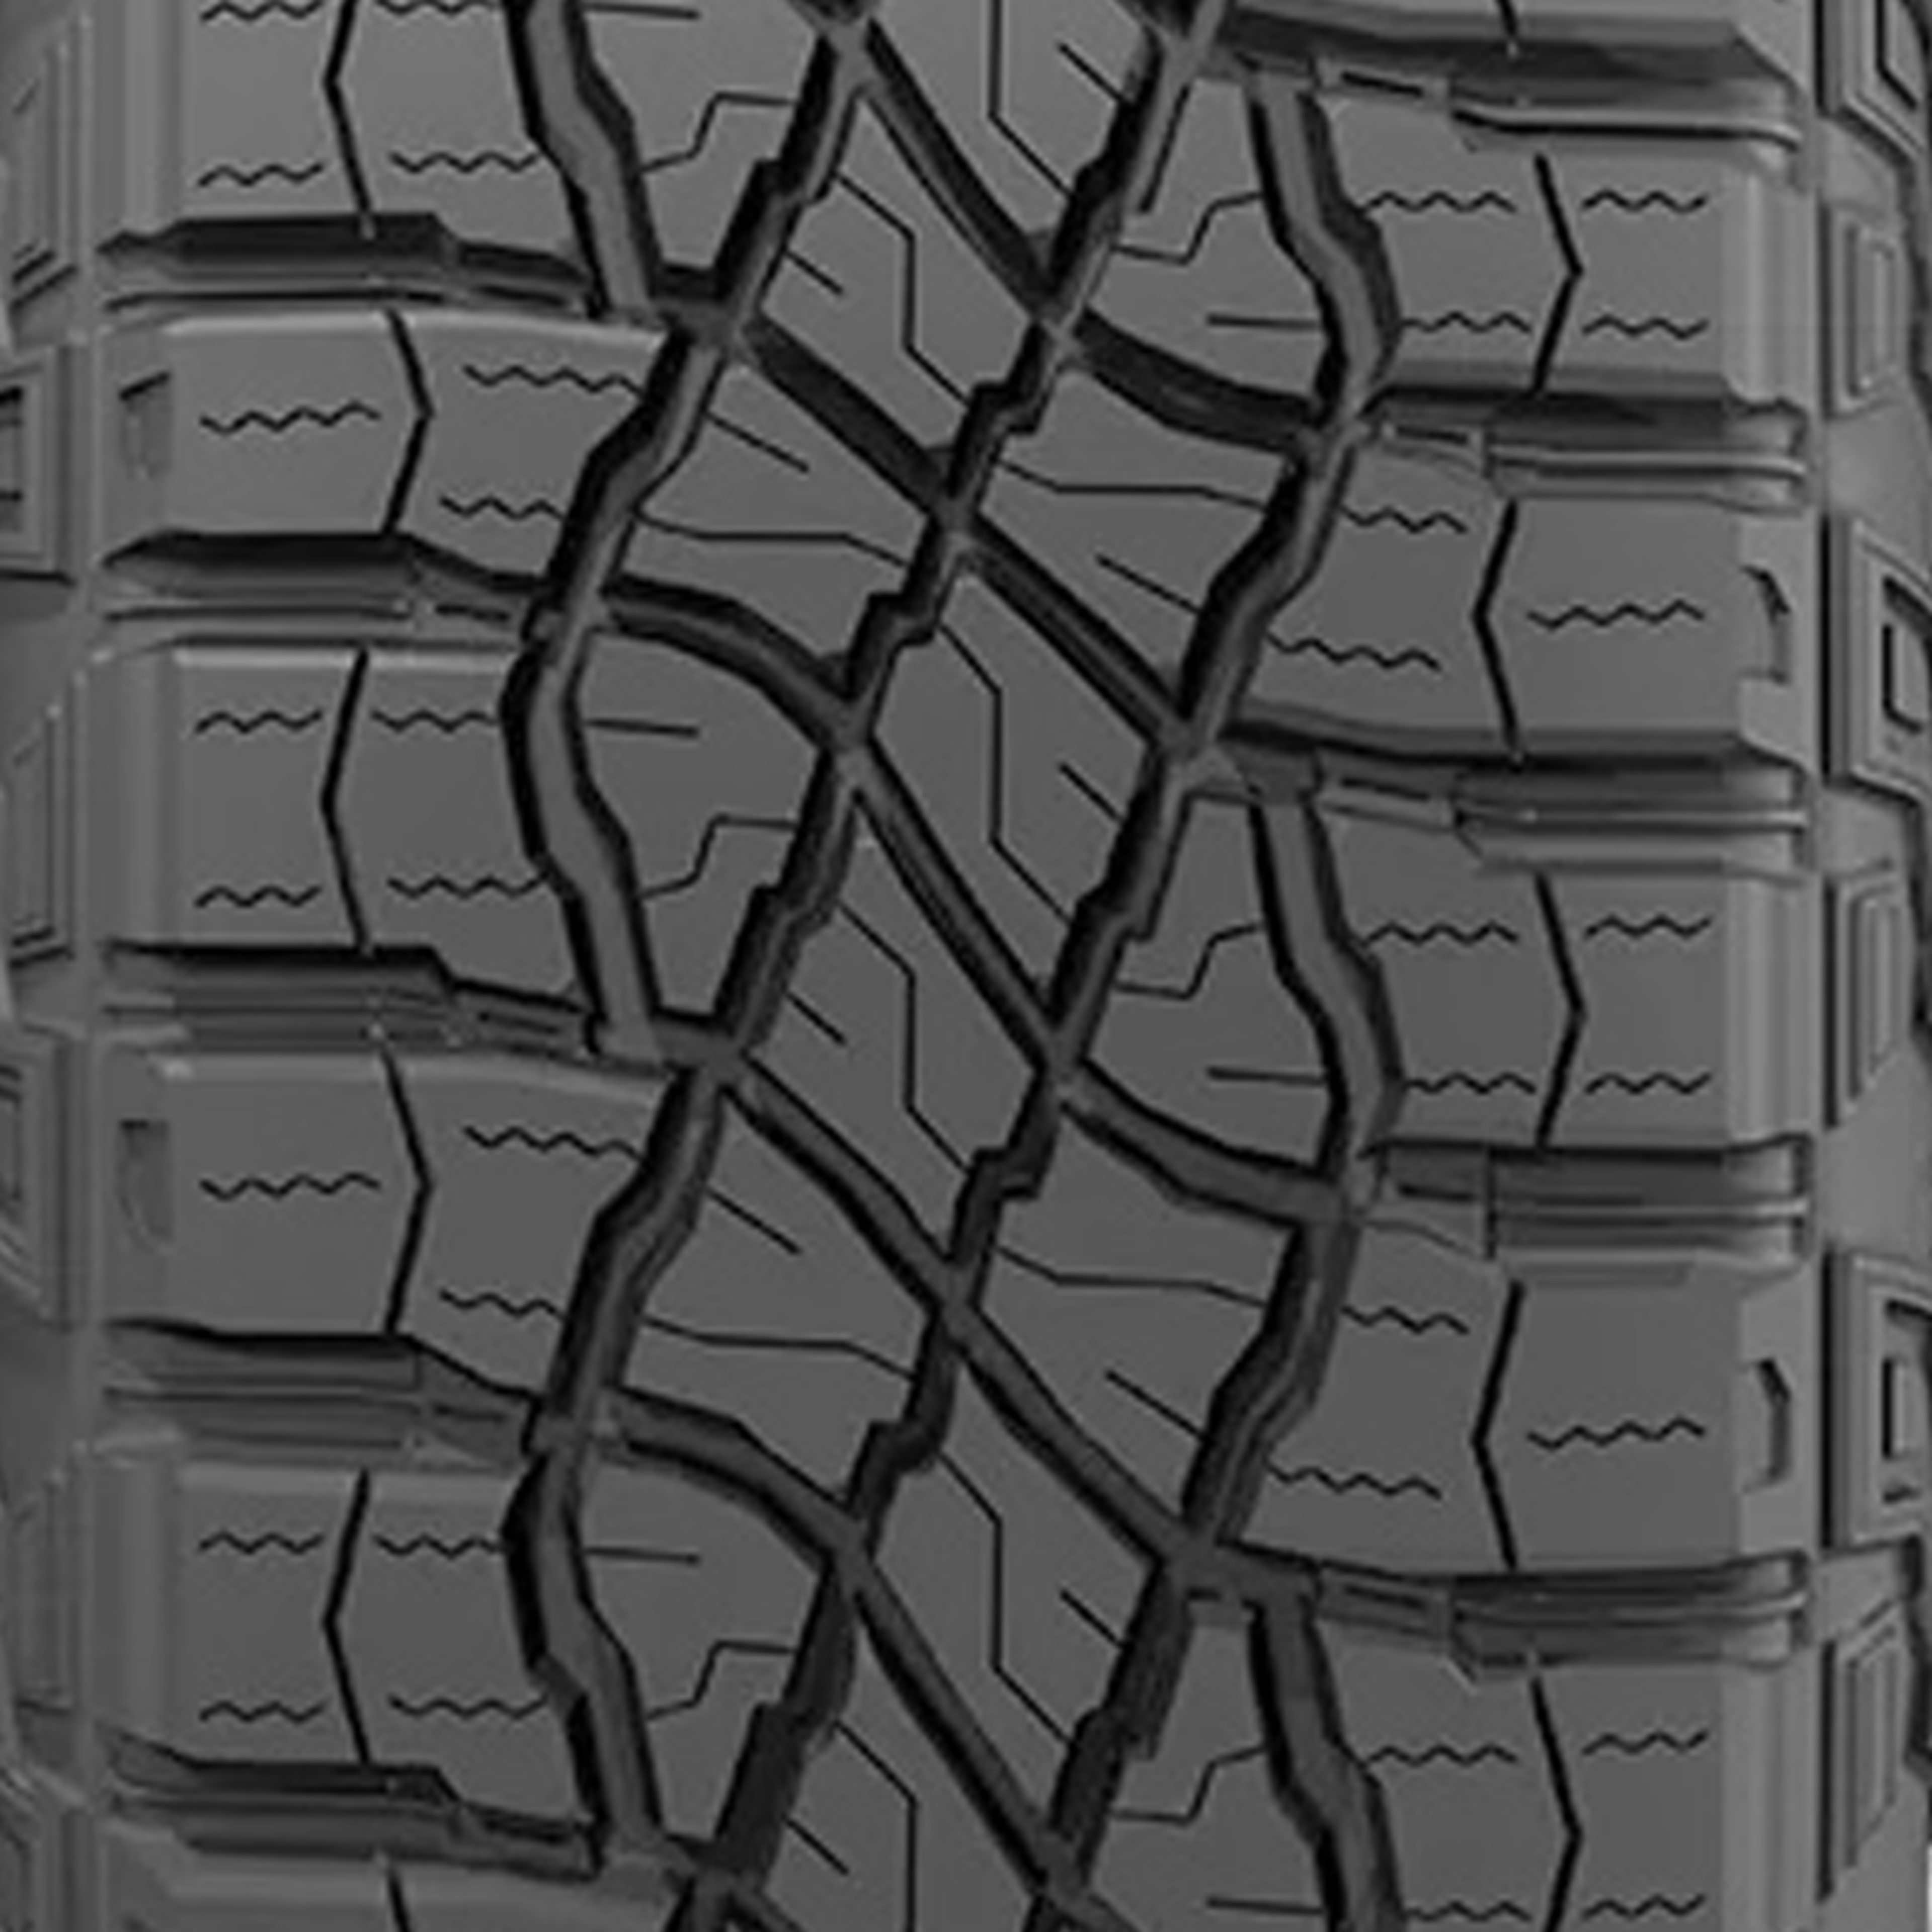 Buy Goodyear Wrangler Territory MT Tires Online | SimpleTire